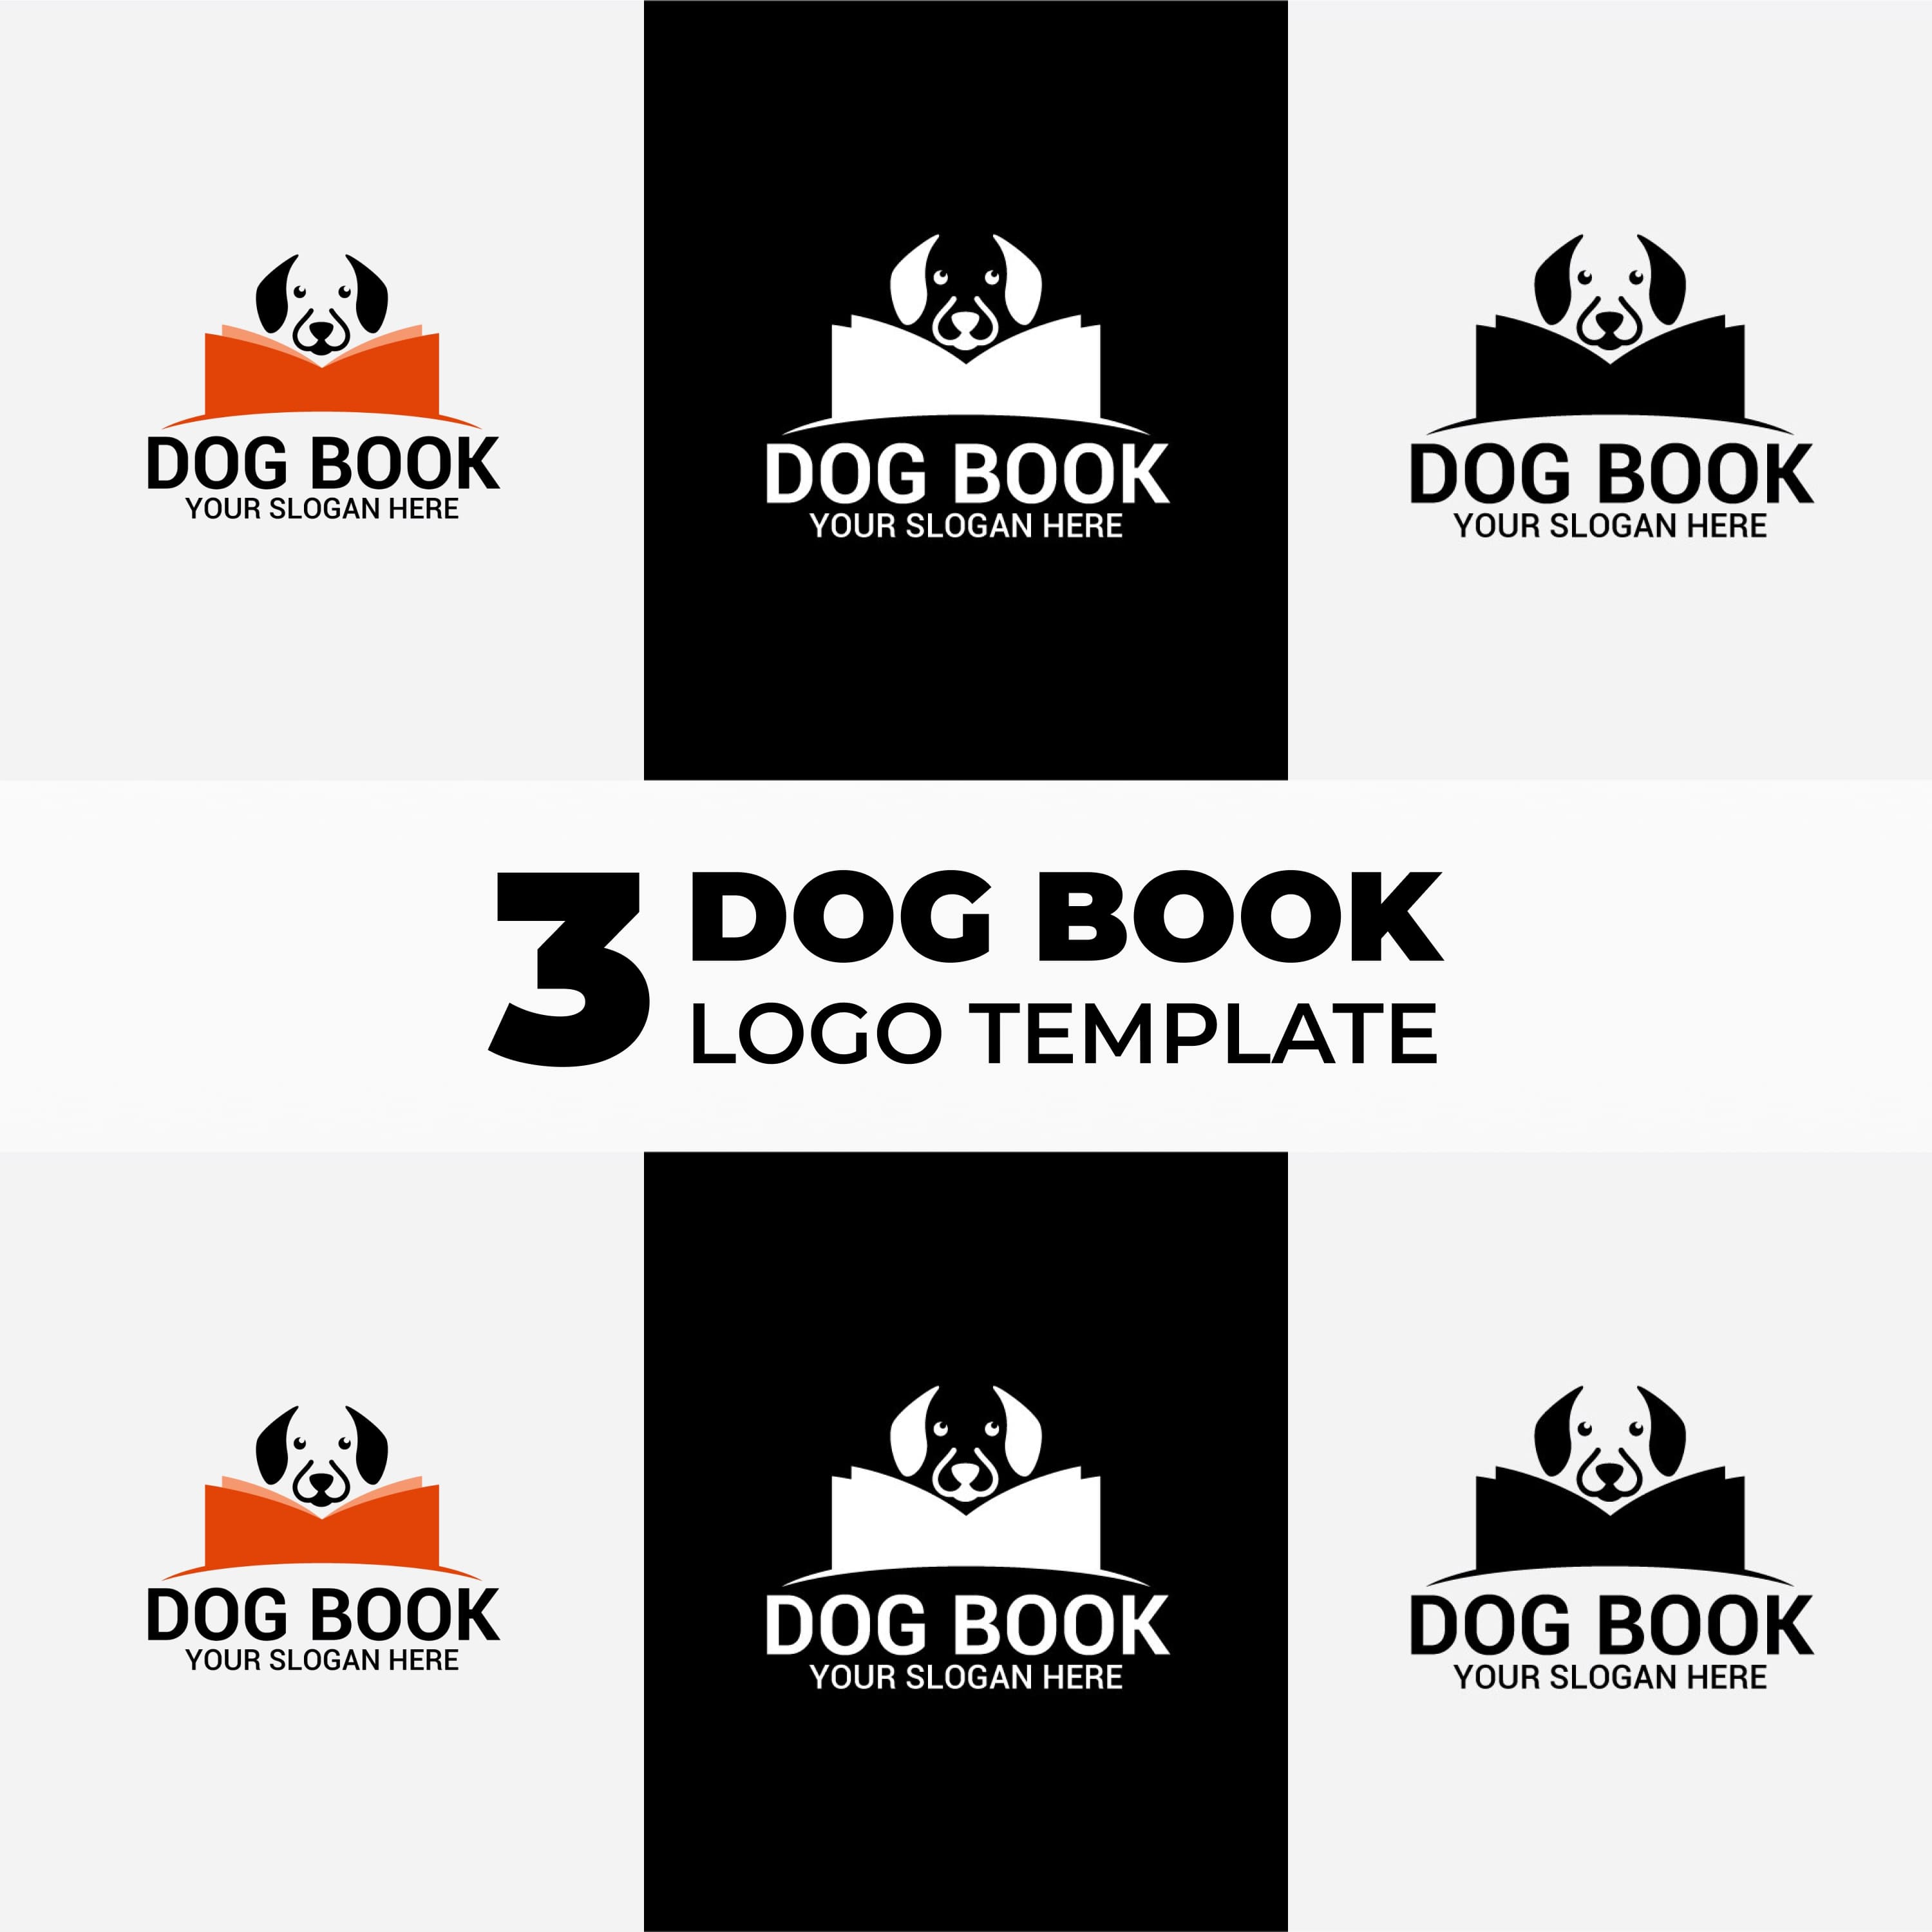 DOG BOOK LOGO cover.